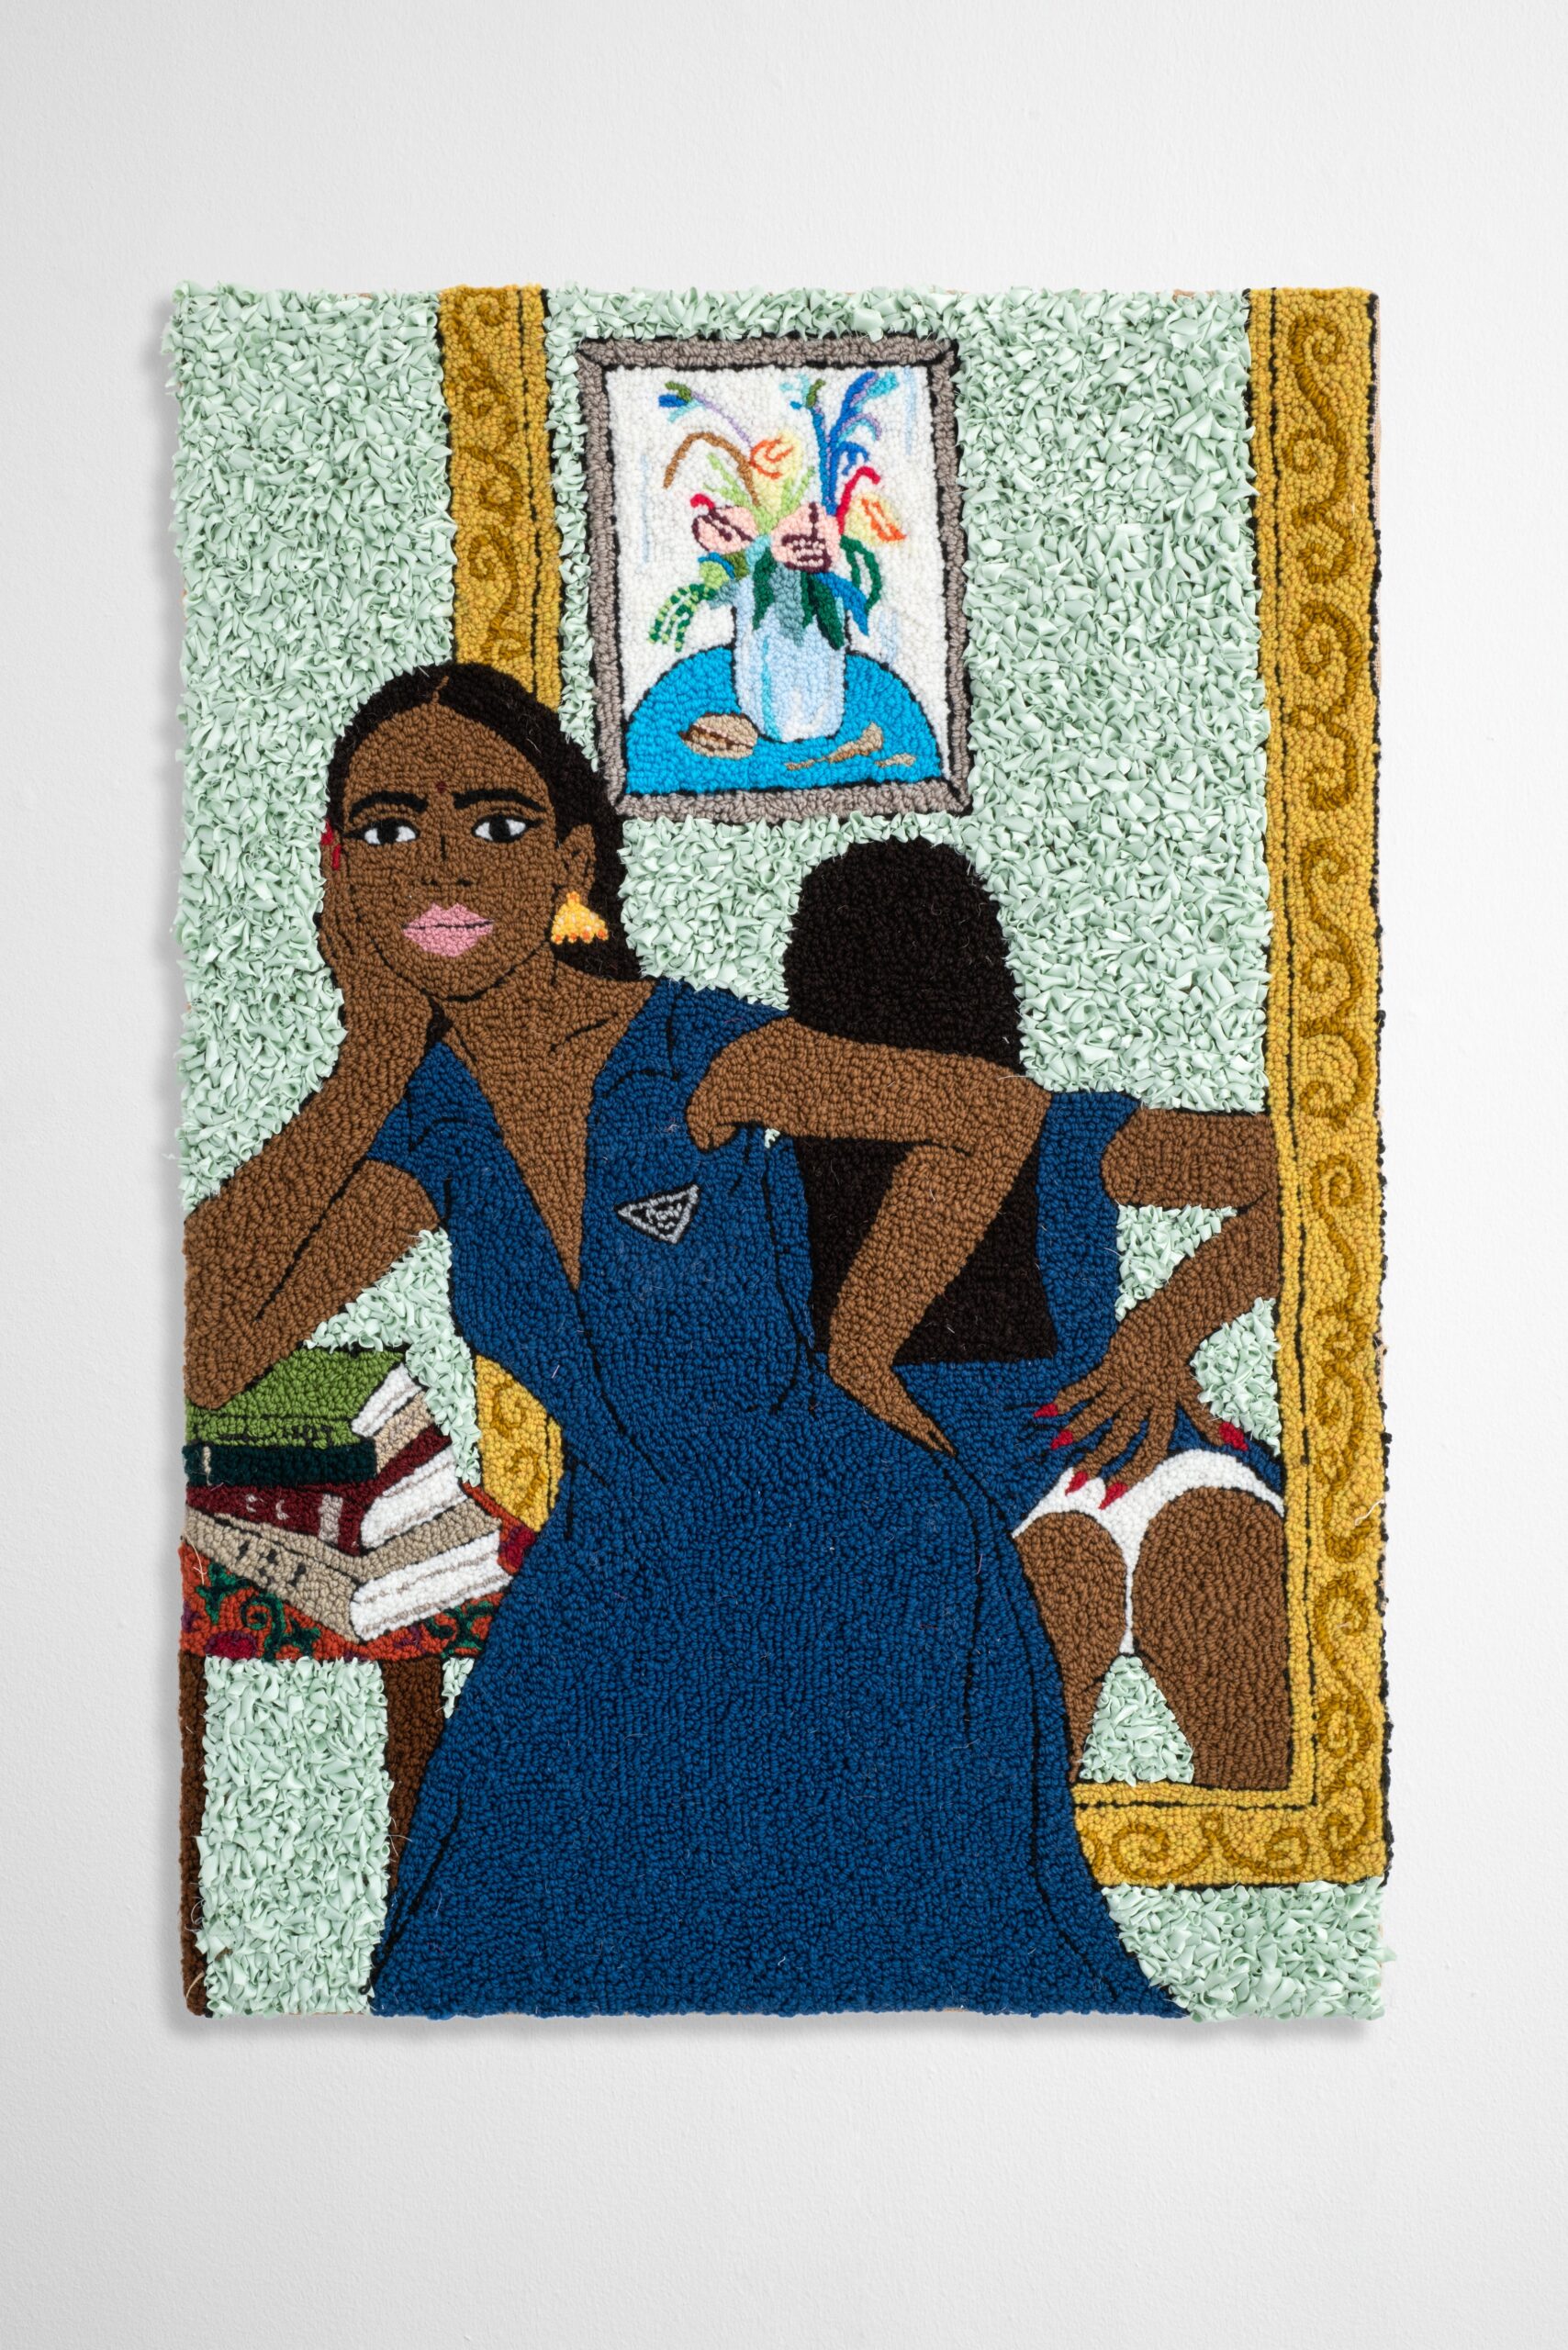 Talia Ramkilawan. What I want wants me, 2022. Wool and cloth on hessian. 89 x 61 x 4 cm. (Courtesy of WHATIFTHEWORLD)